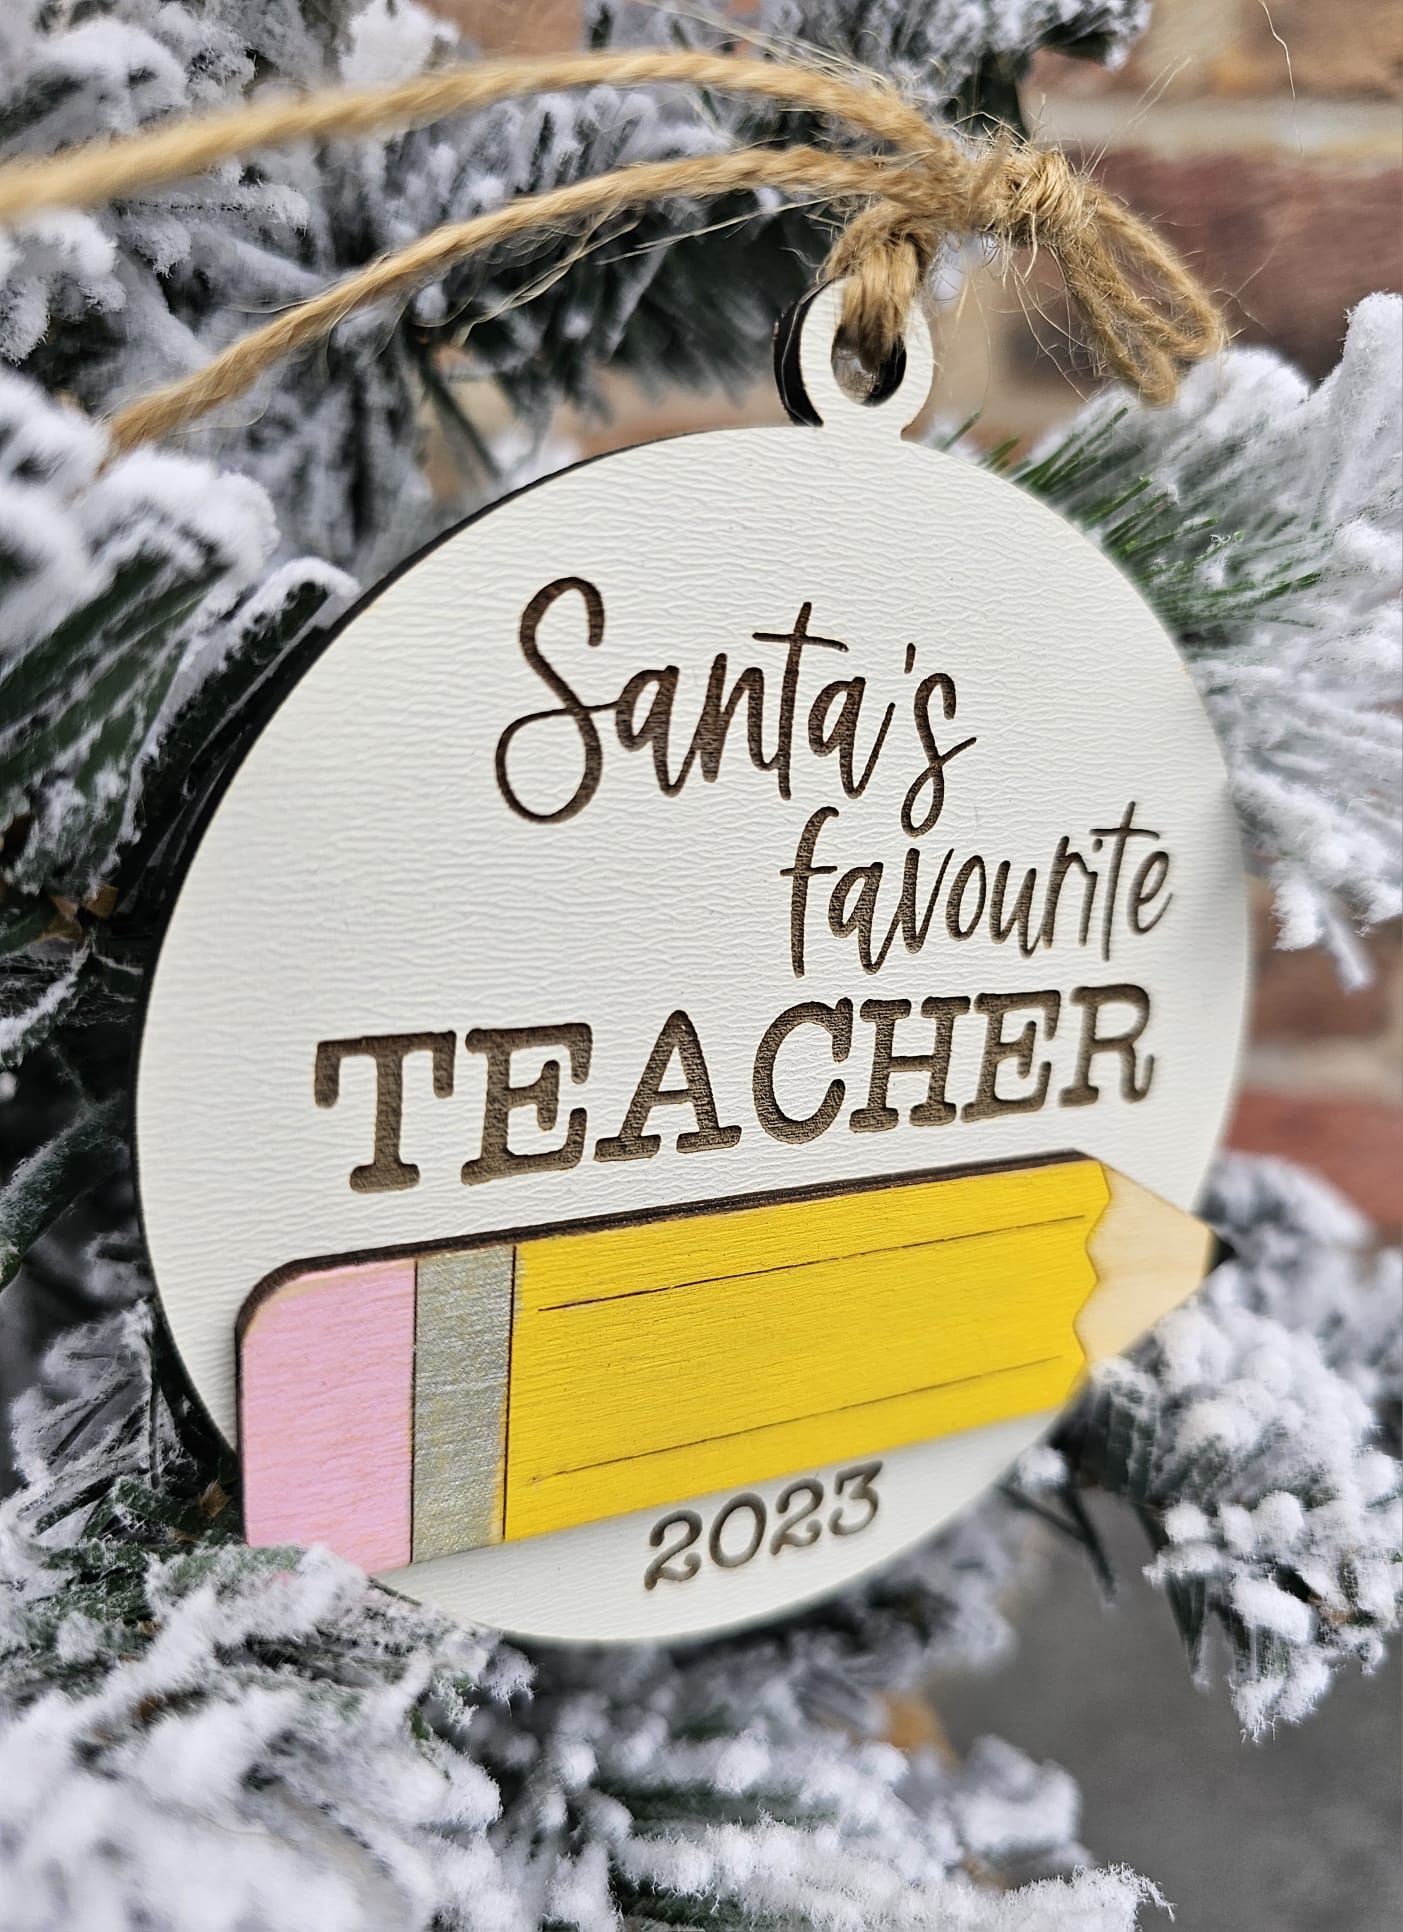 Santa's Favourite teacher Ornament